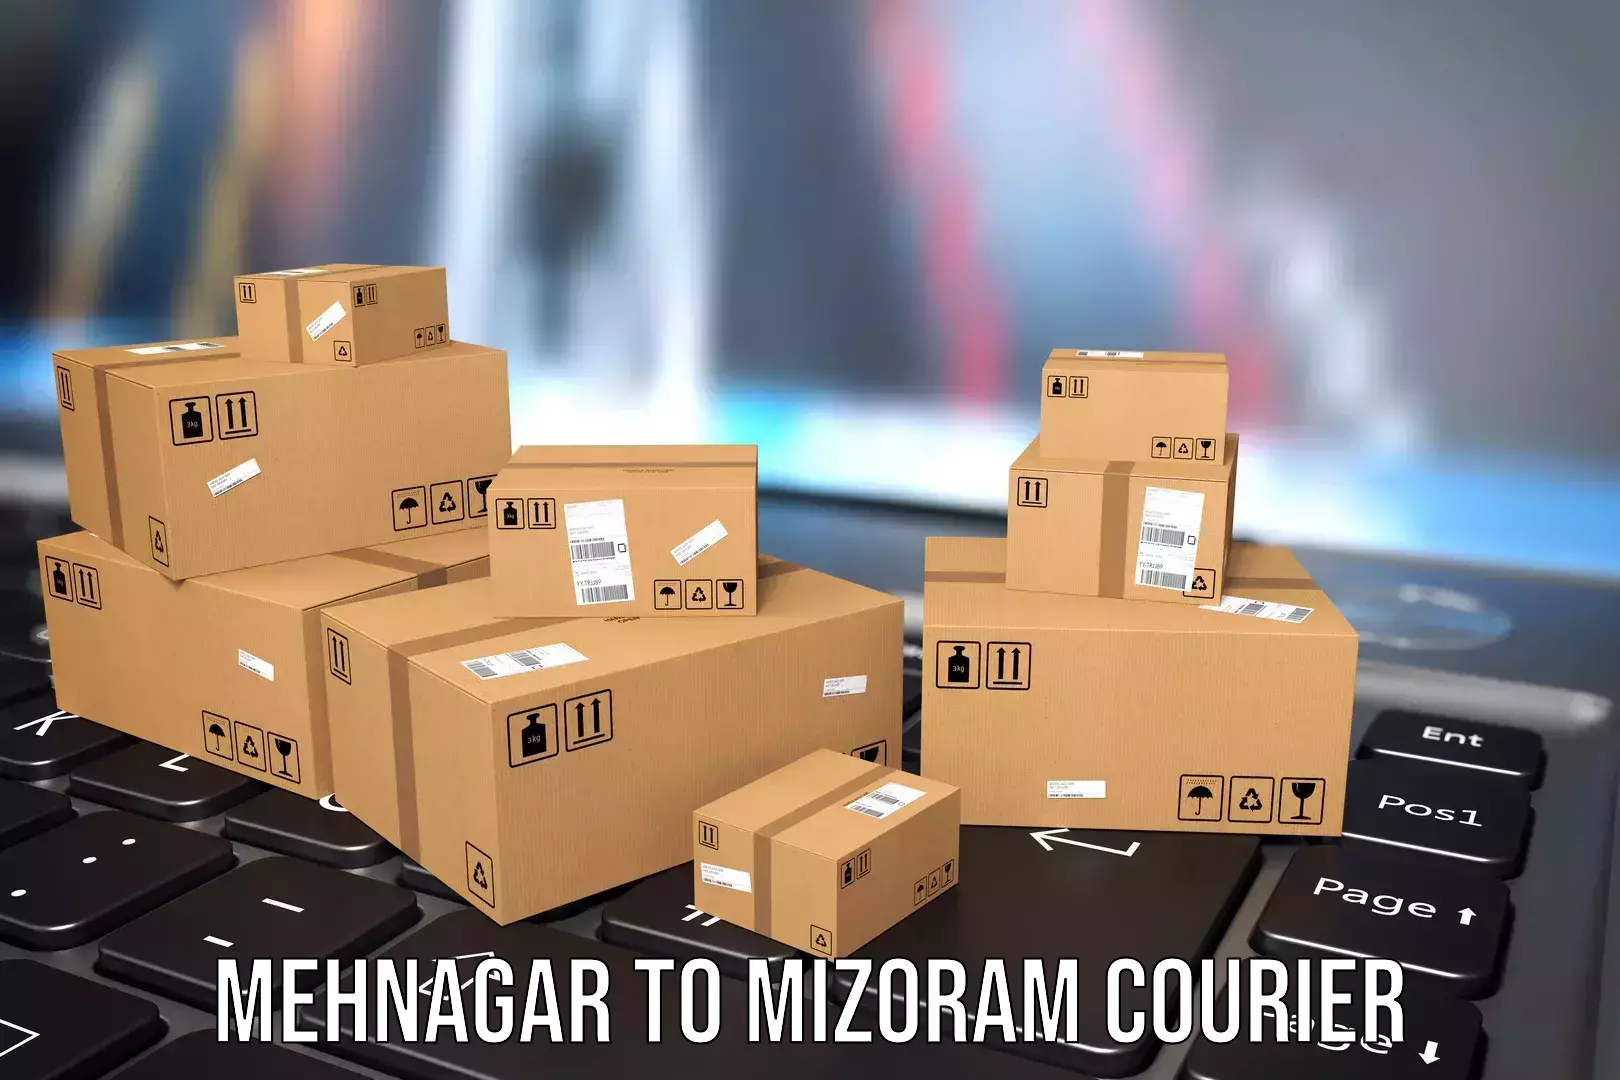 Baggage transport network Mehnagar to Darlawn